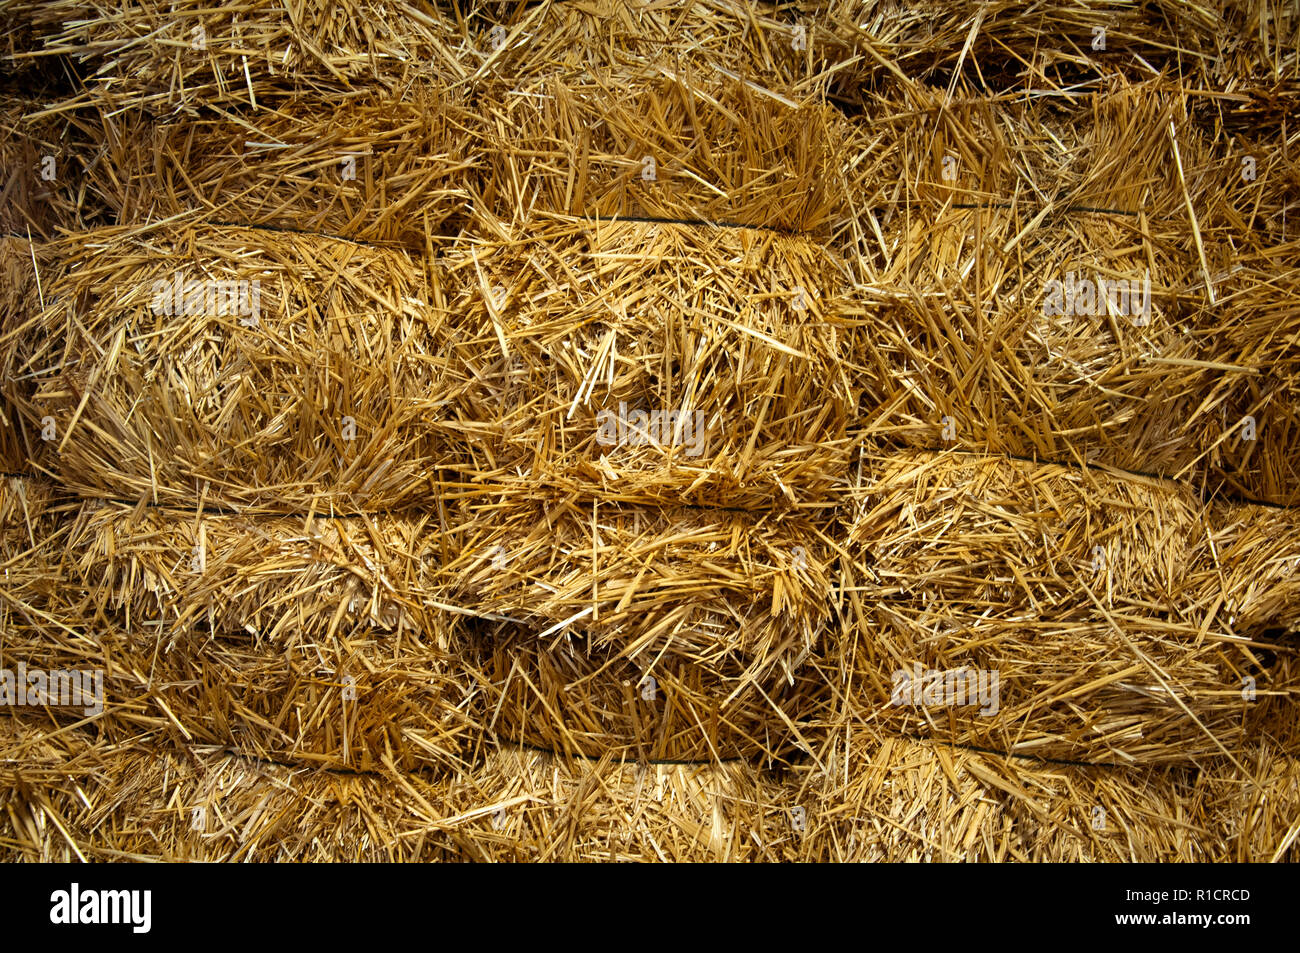 Bug bricks of yellow hay, close-up, Spain Stock Photo